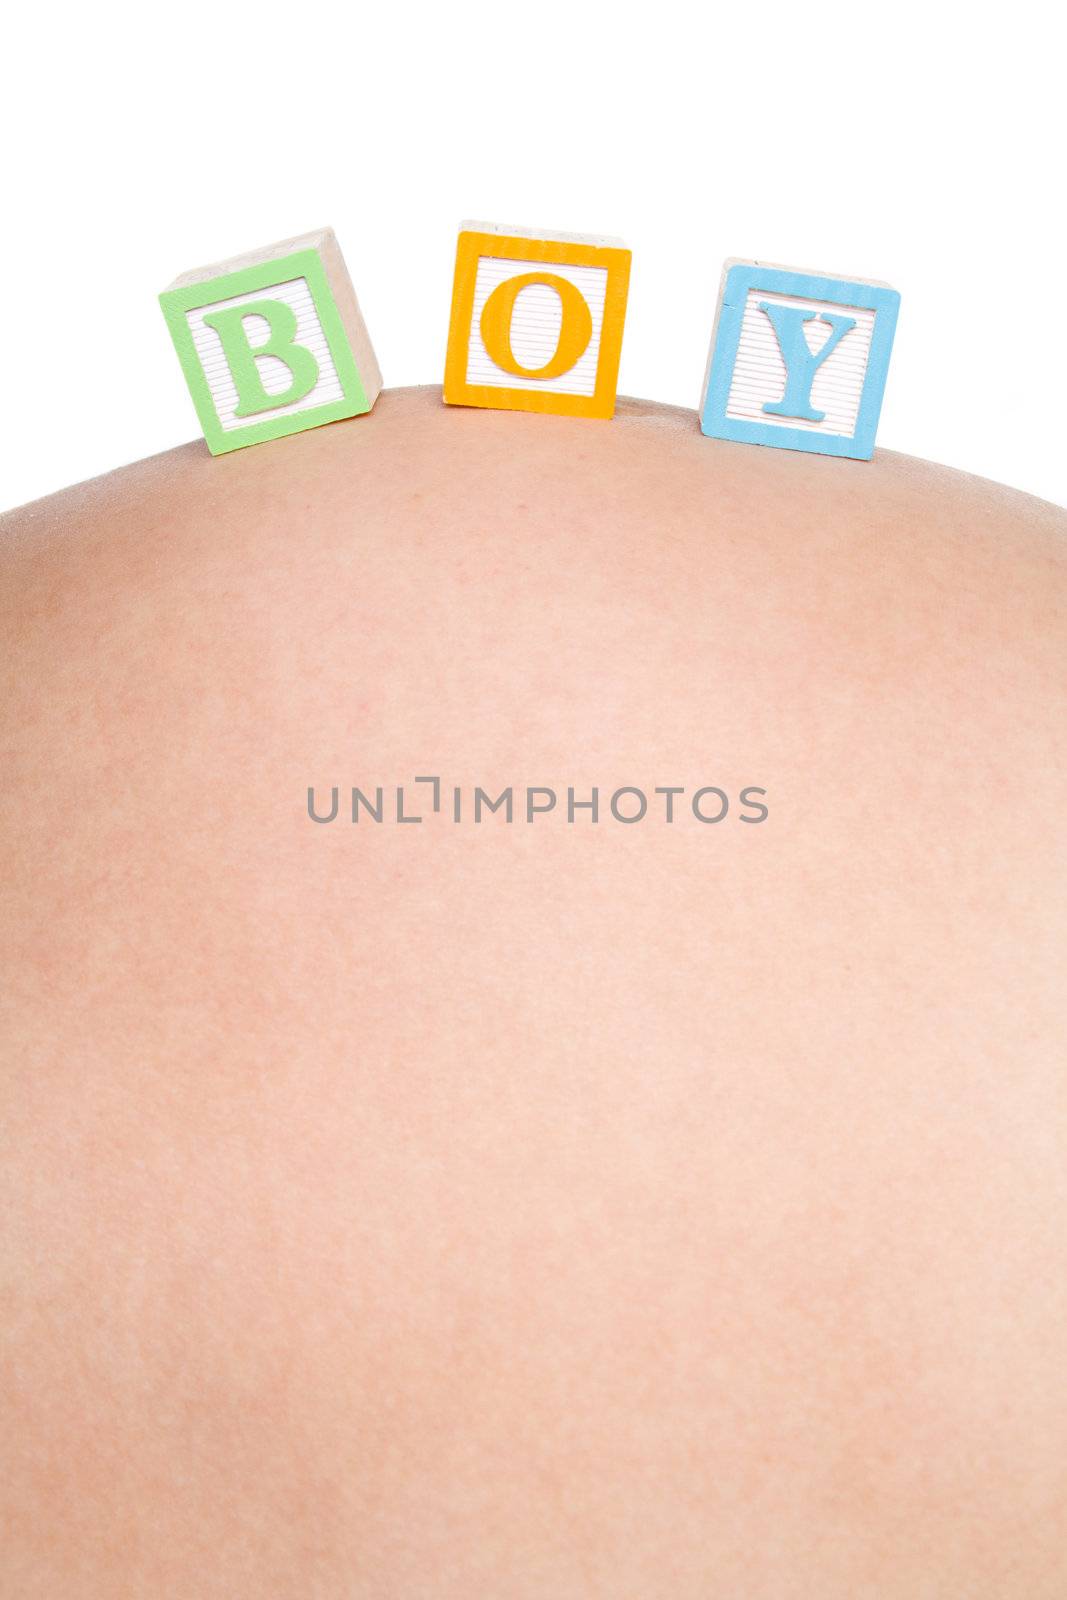 Baby boy blocks on pregnant belly